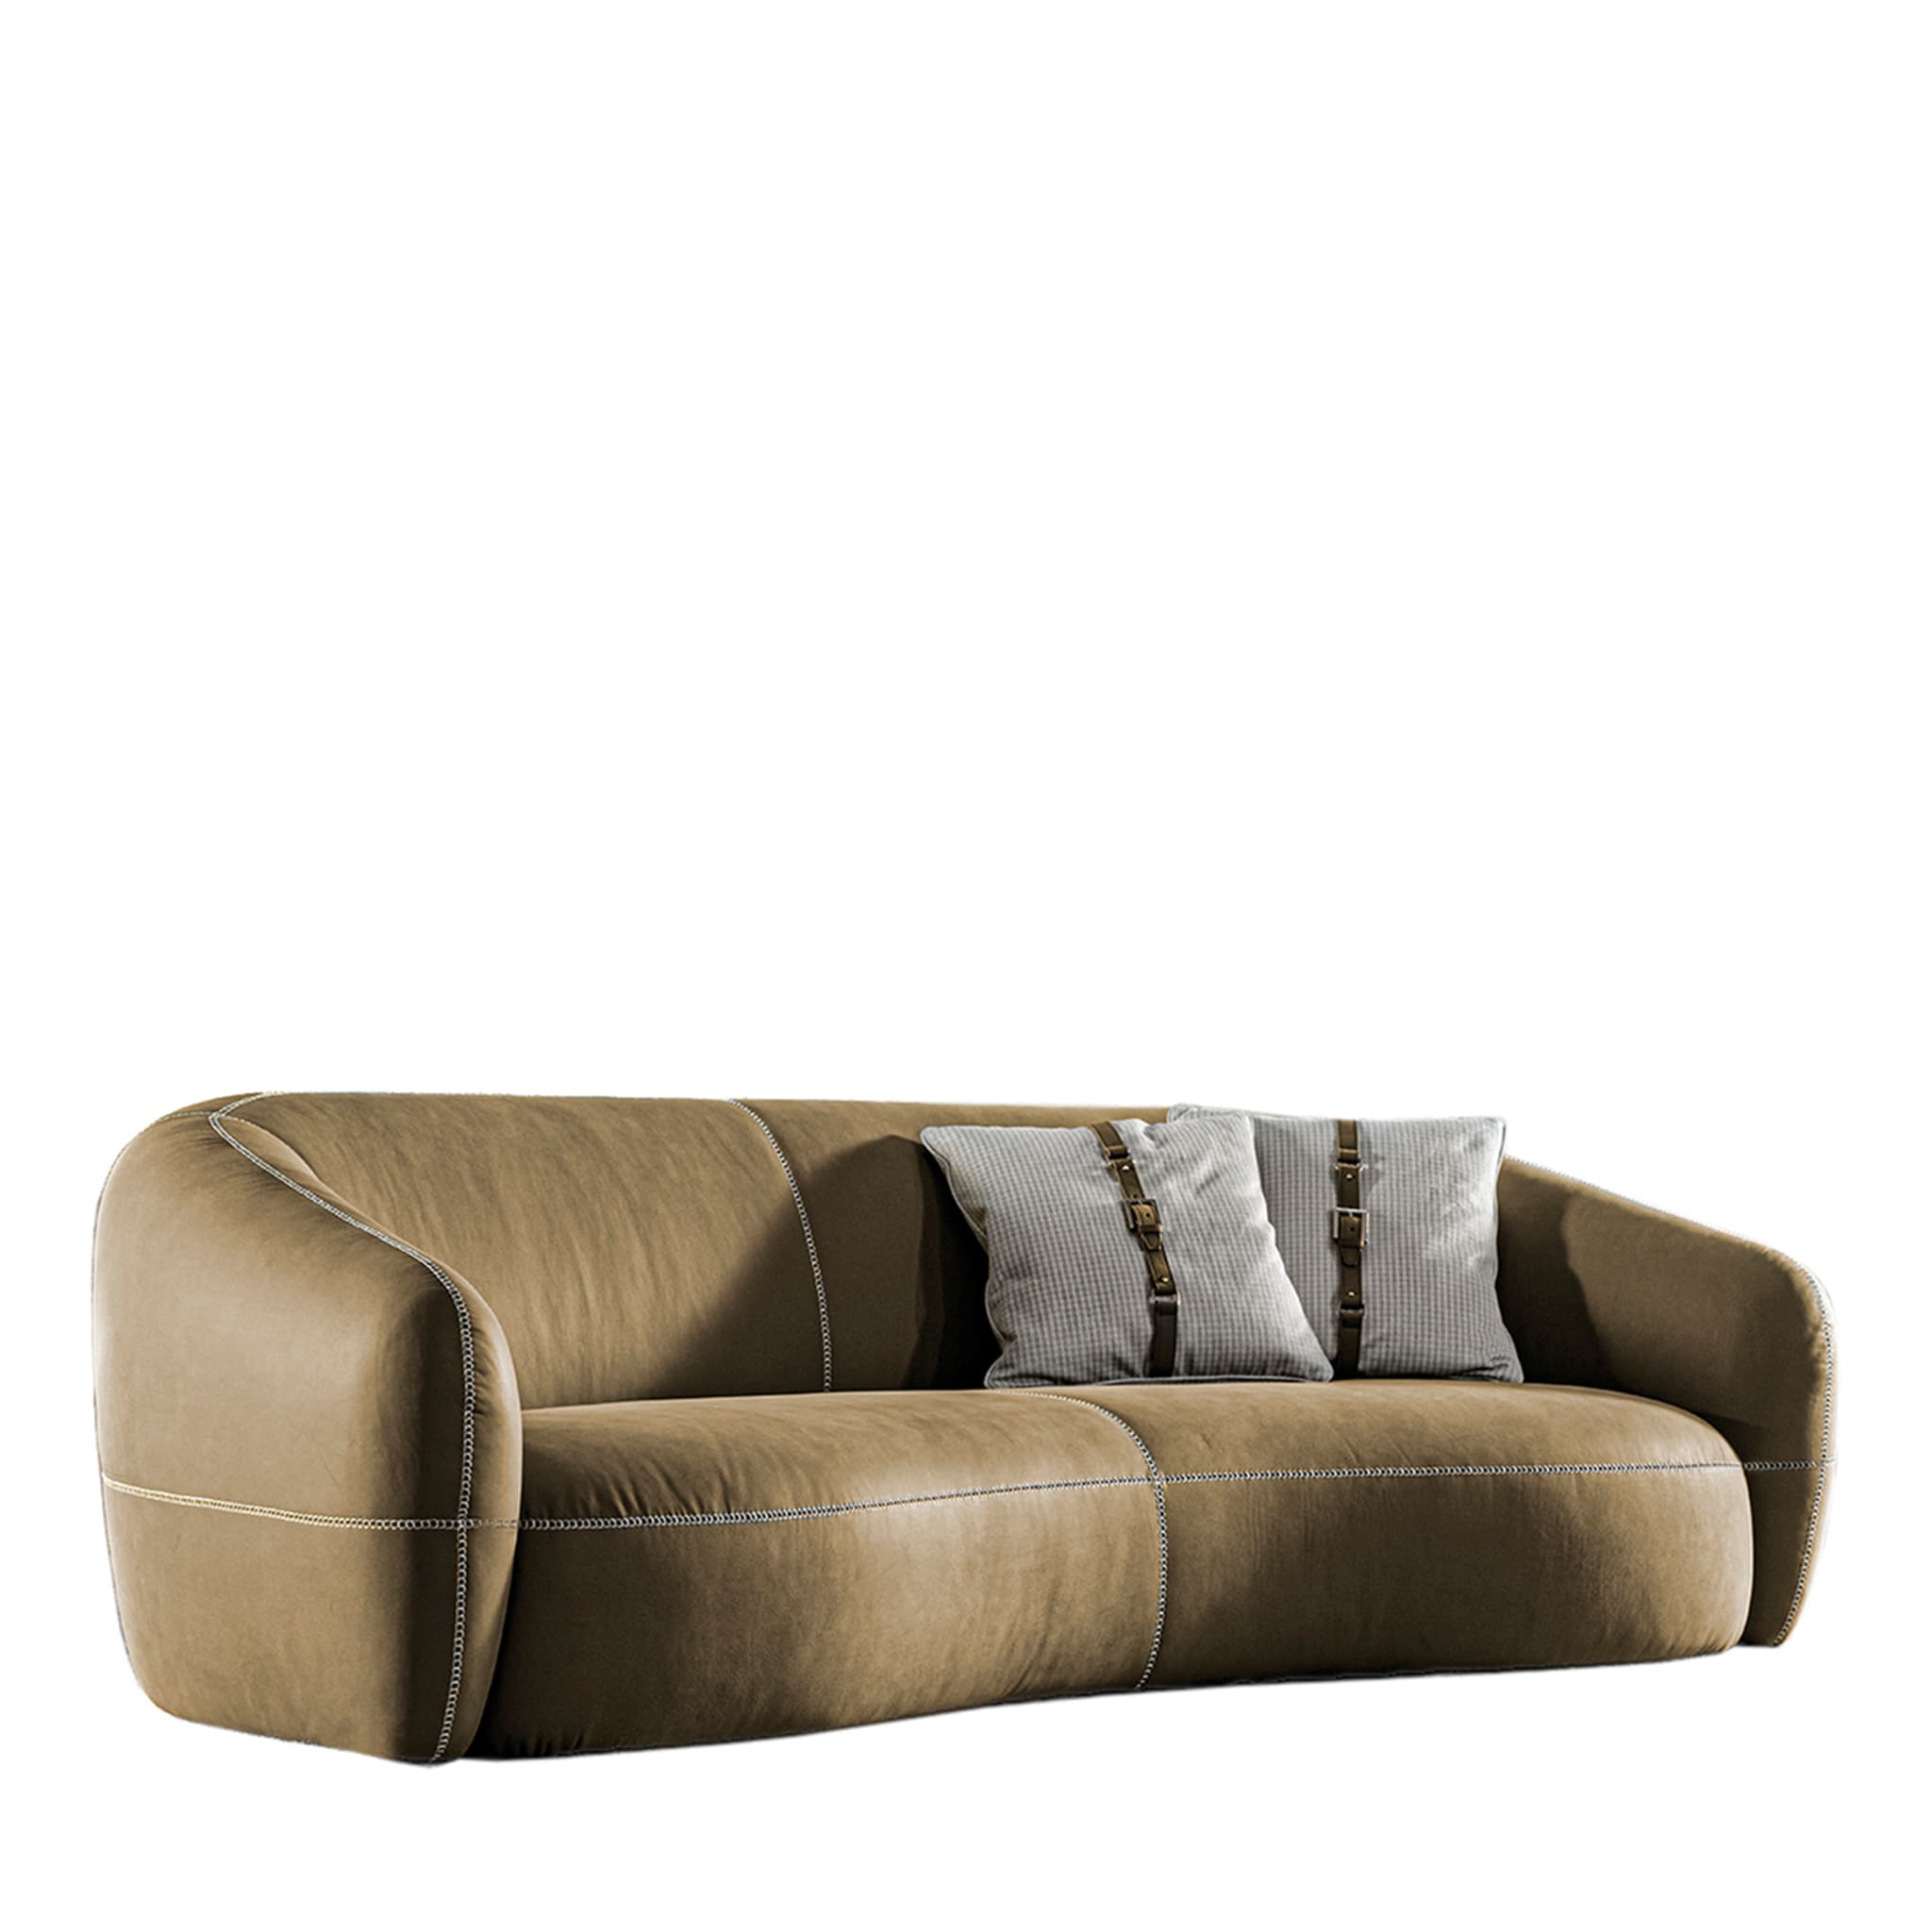 Tivoli Green Leather Sofa - Main view